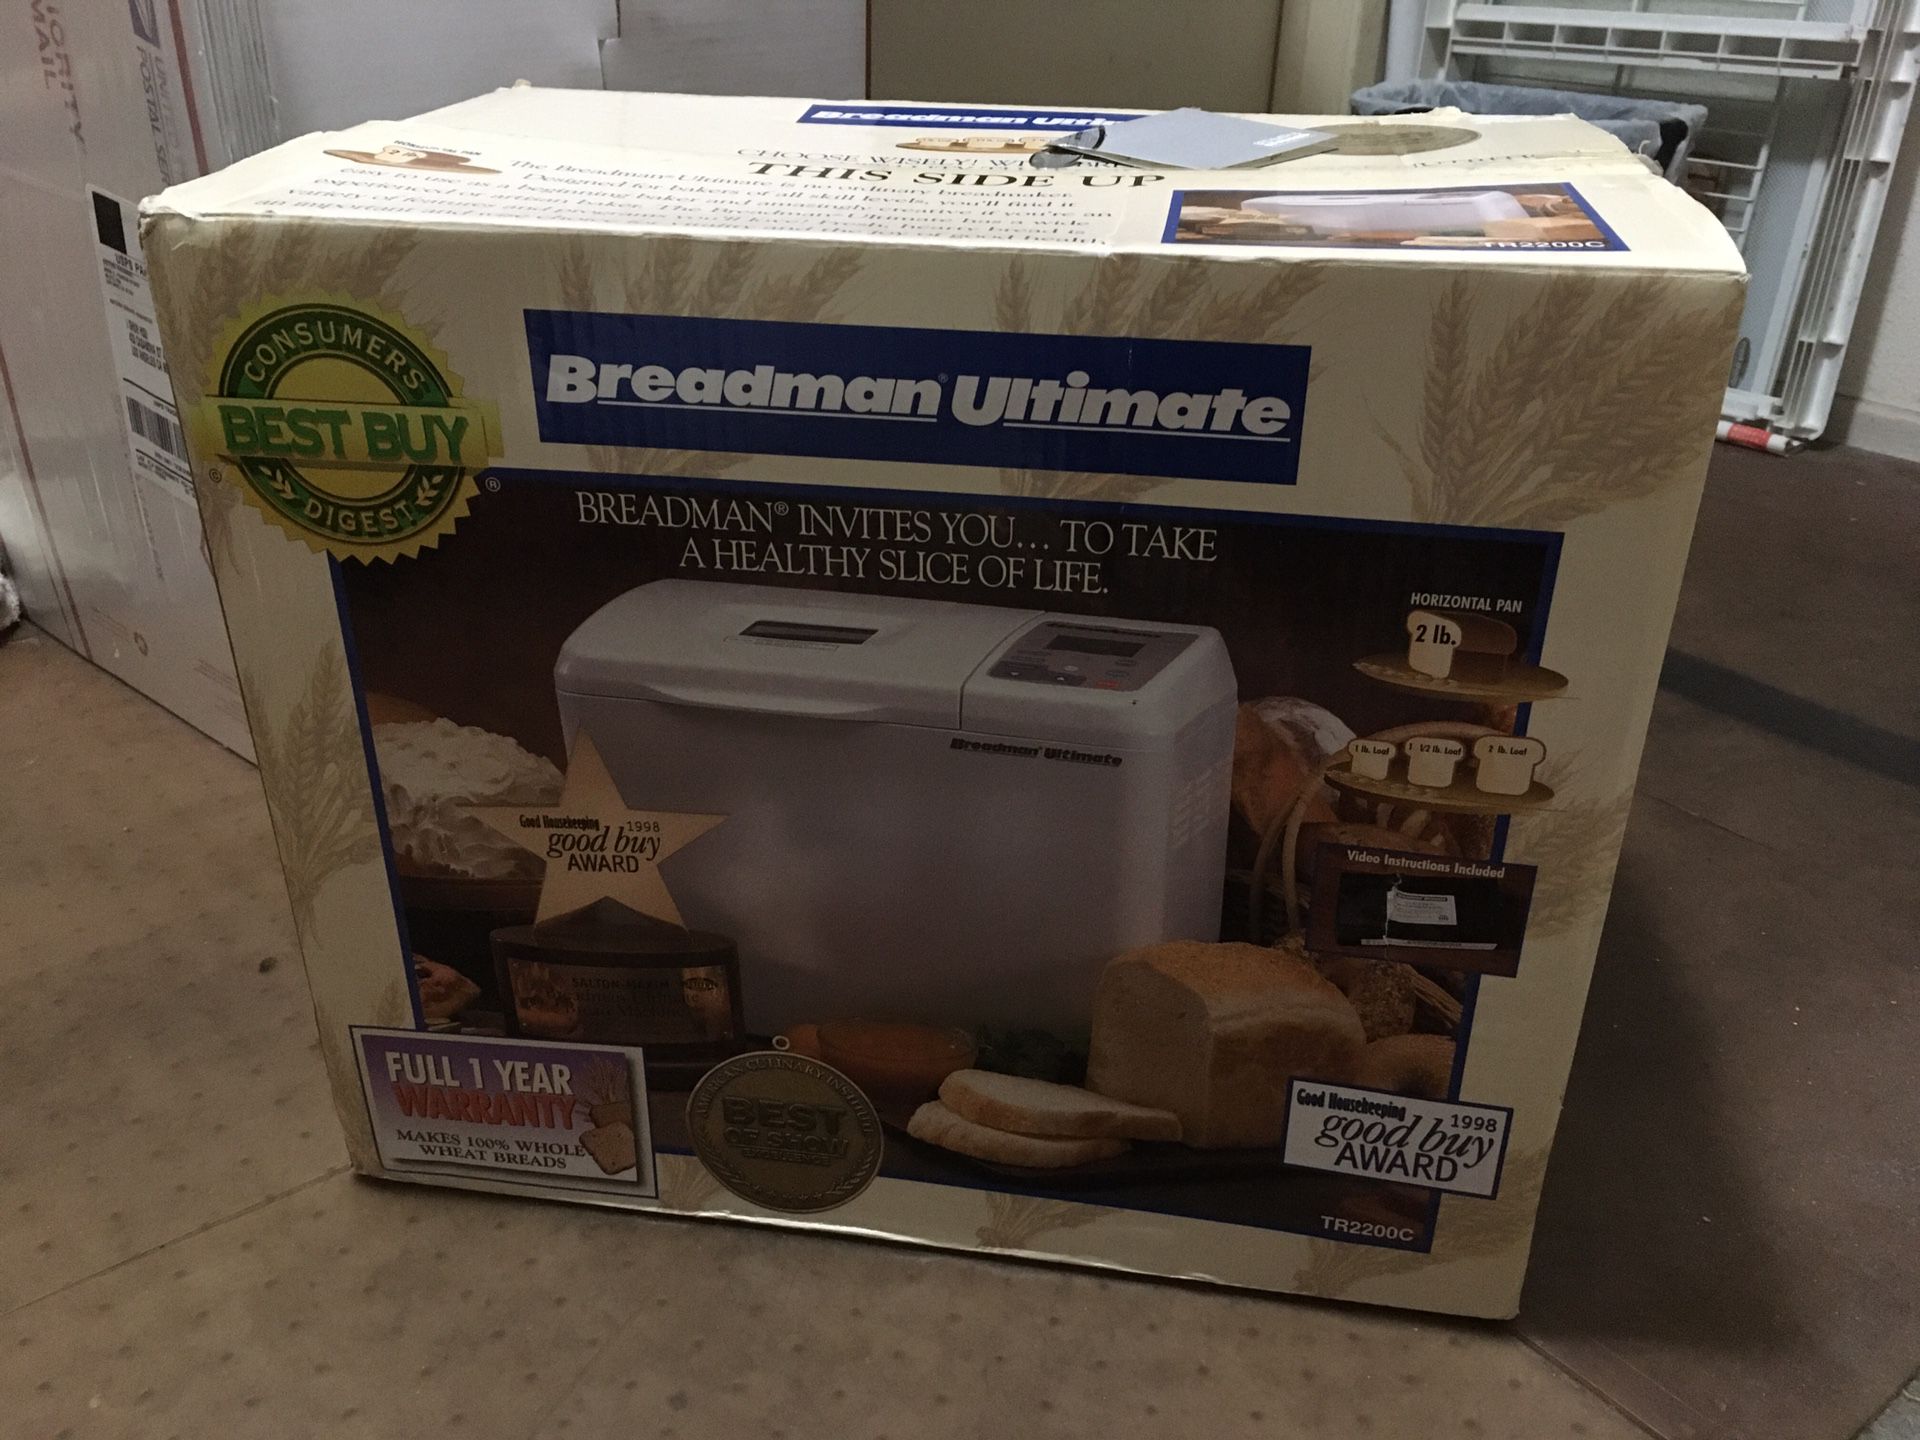 New breadman ultimate bread maker